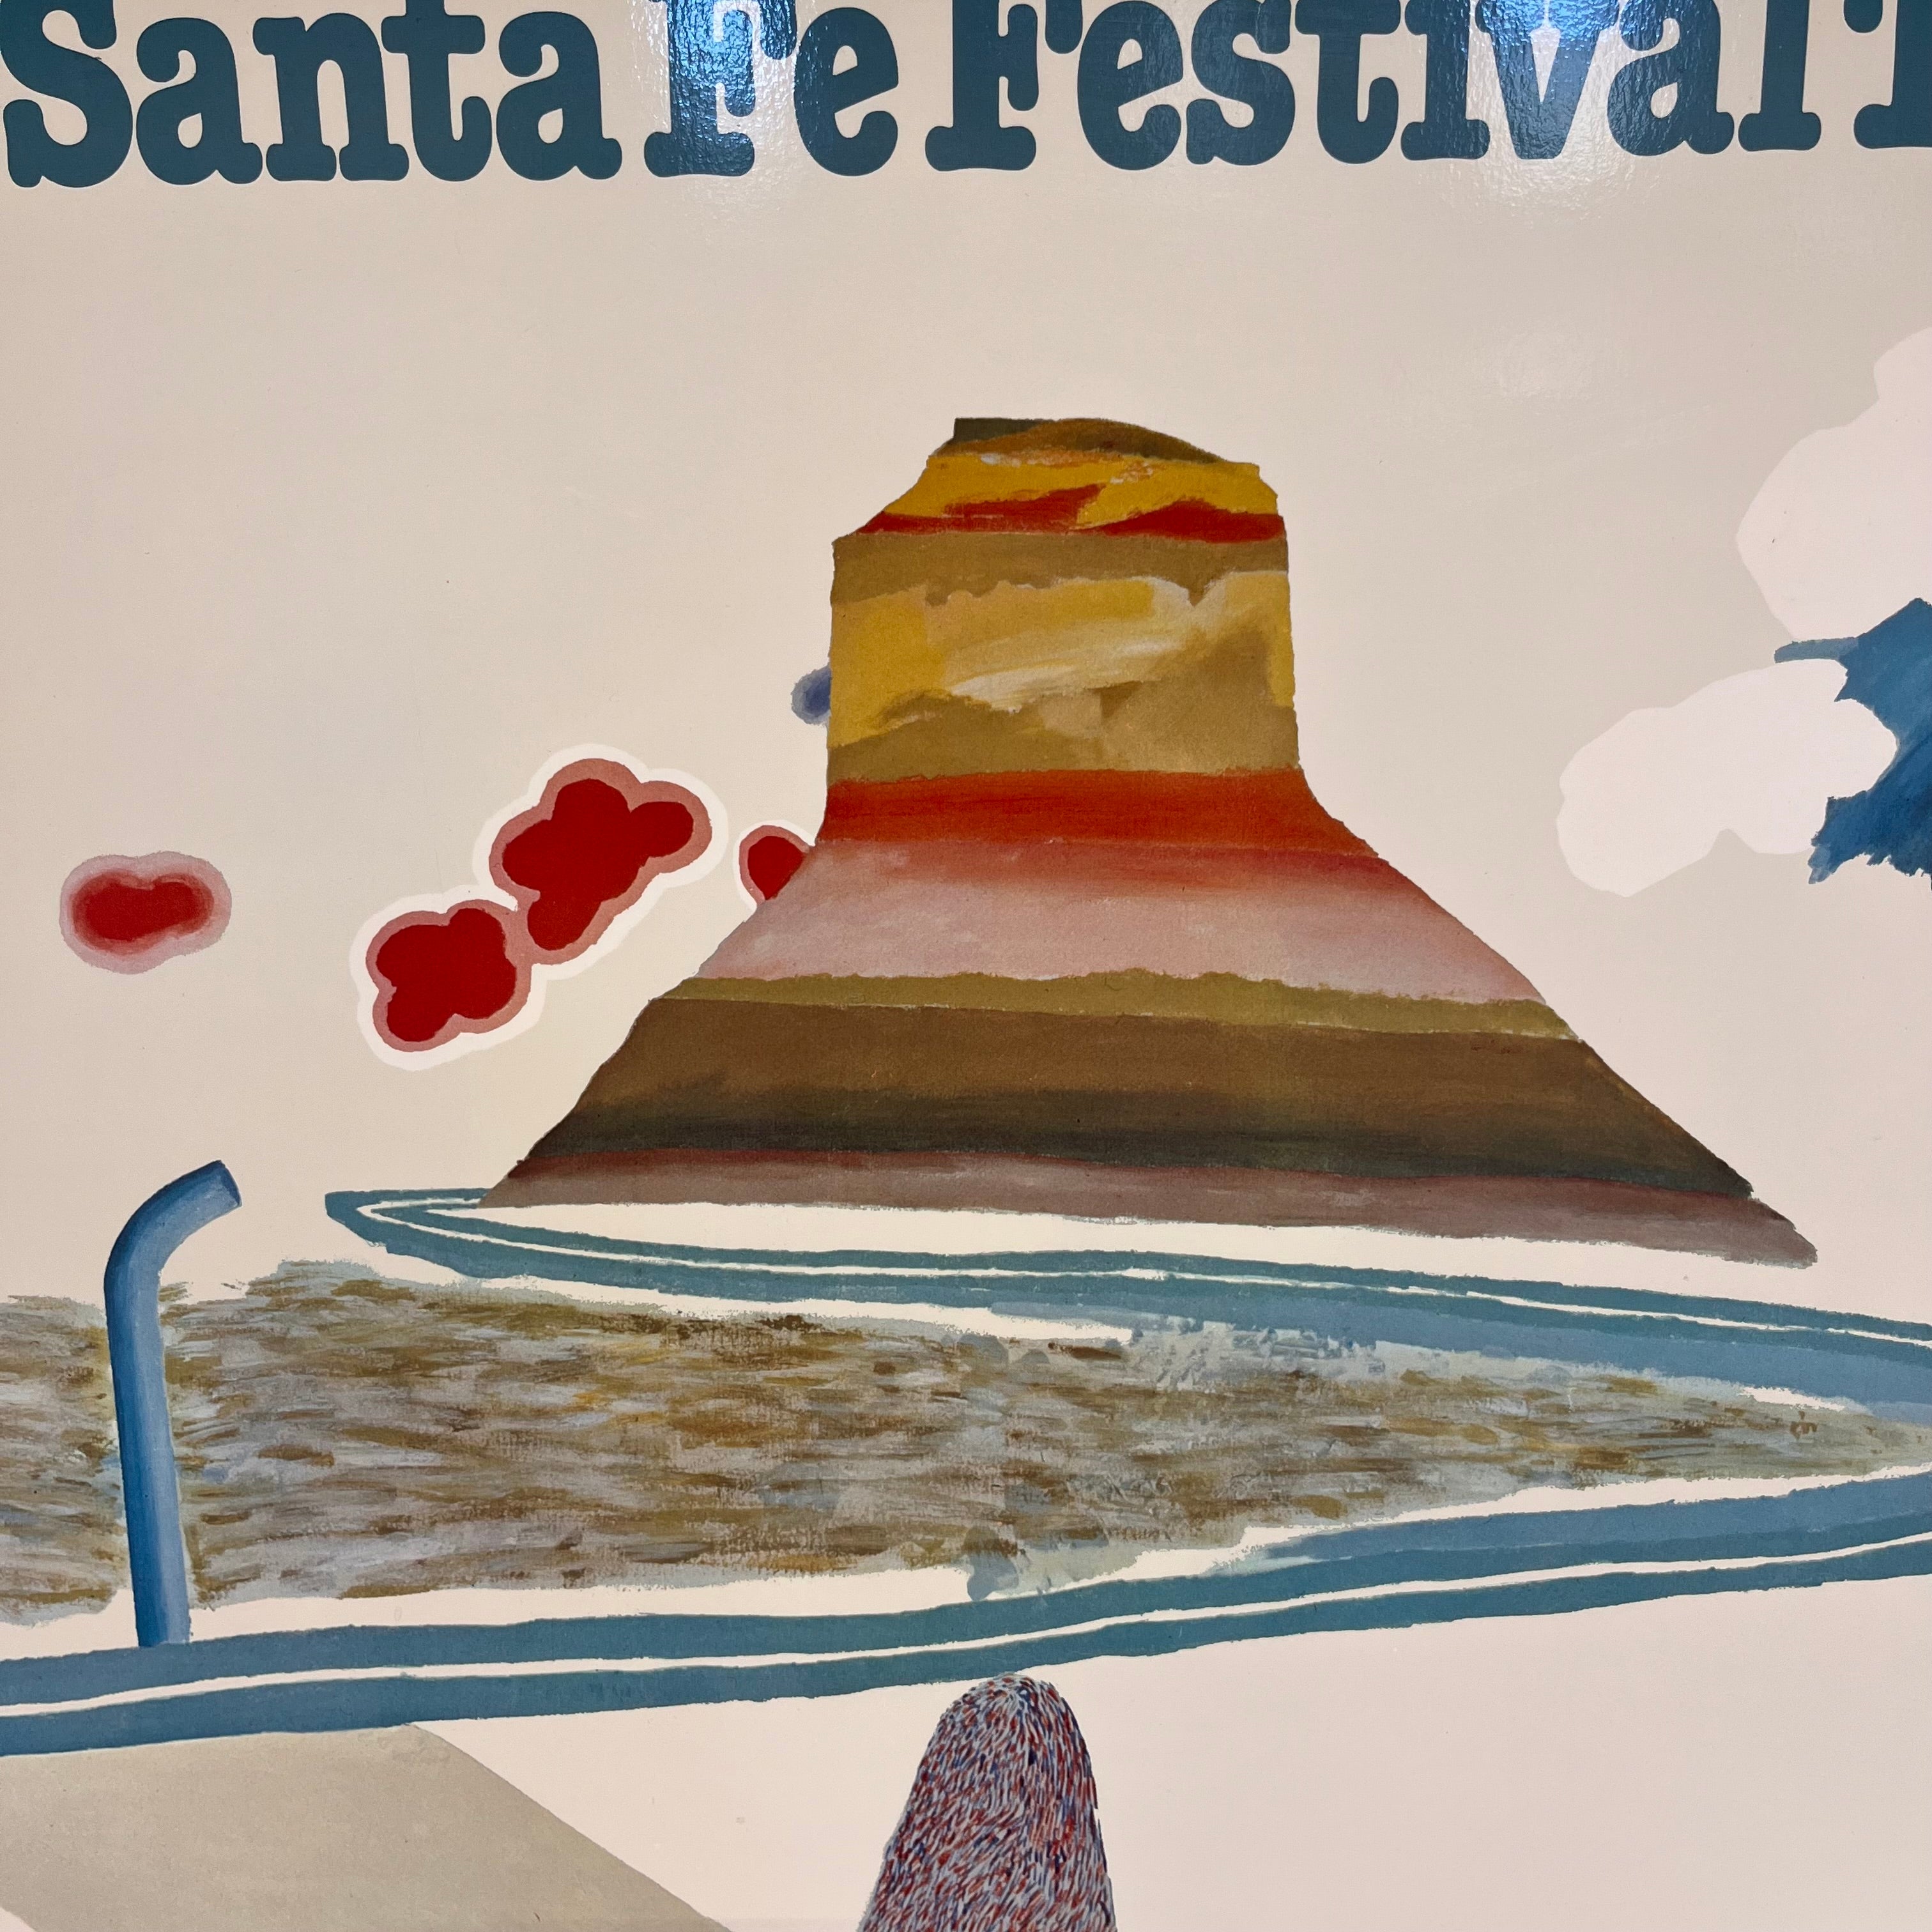 The Santa Fe Festival Theatre 1981 Poster by David Hockney 24"x 30.75" x1"